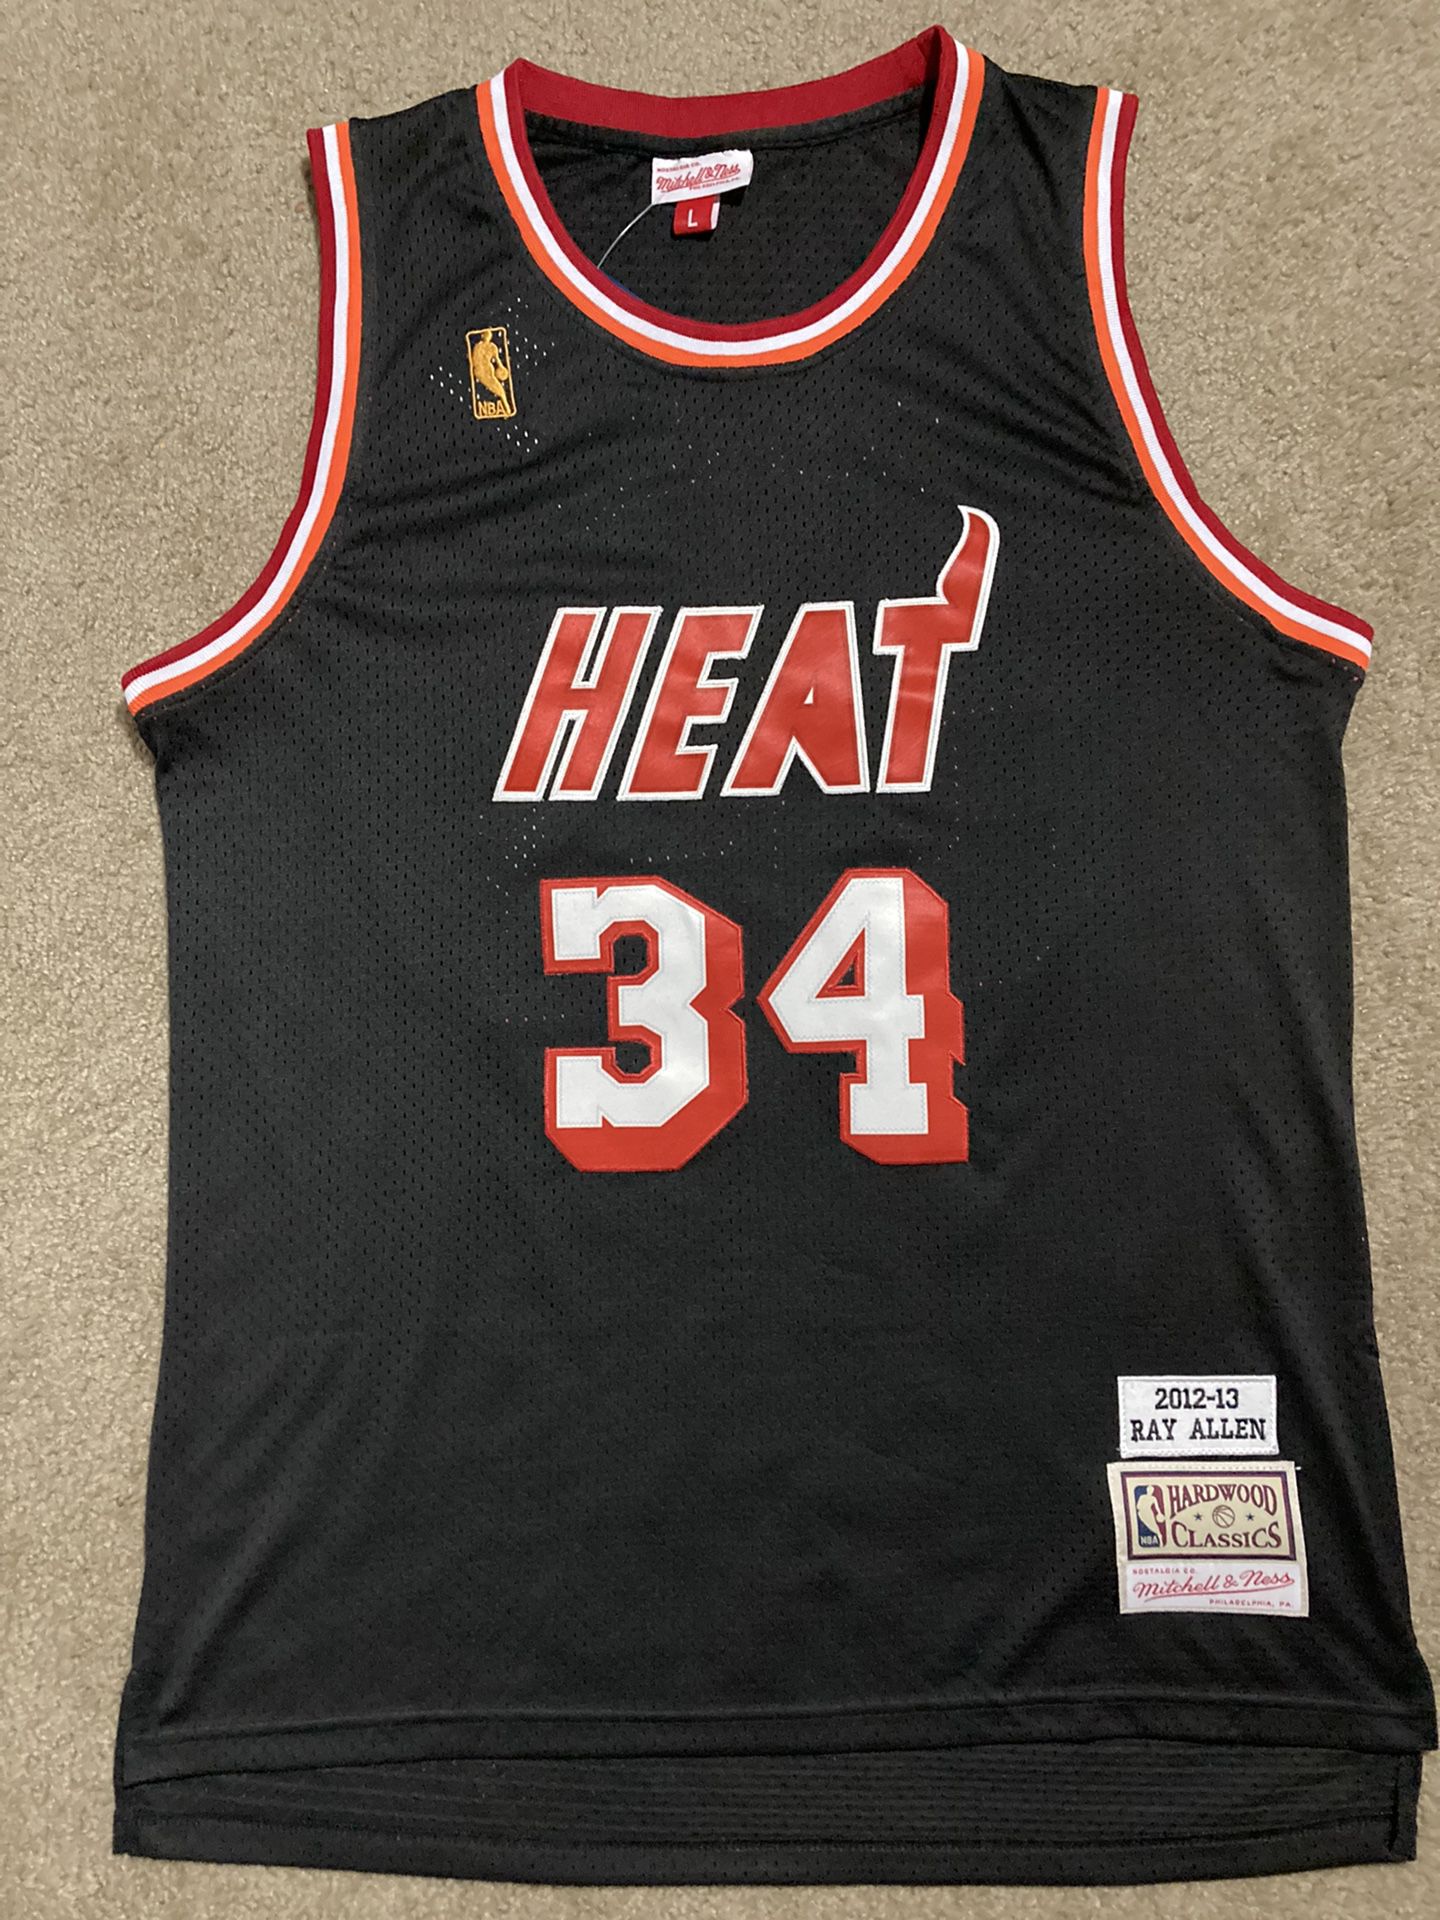 Miami Heat Retro Ray Allen Basketball Jersey for Sale in Mesa, AZ